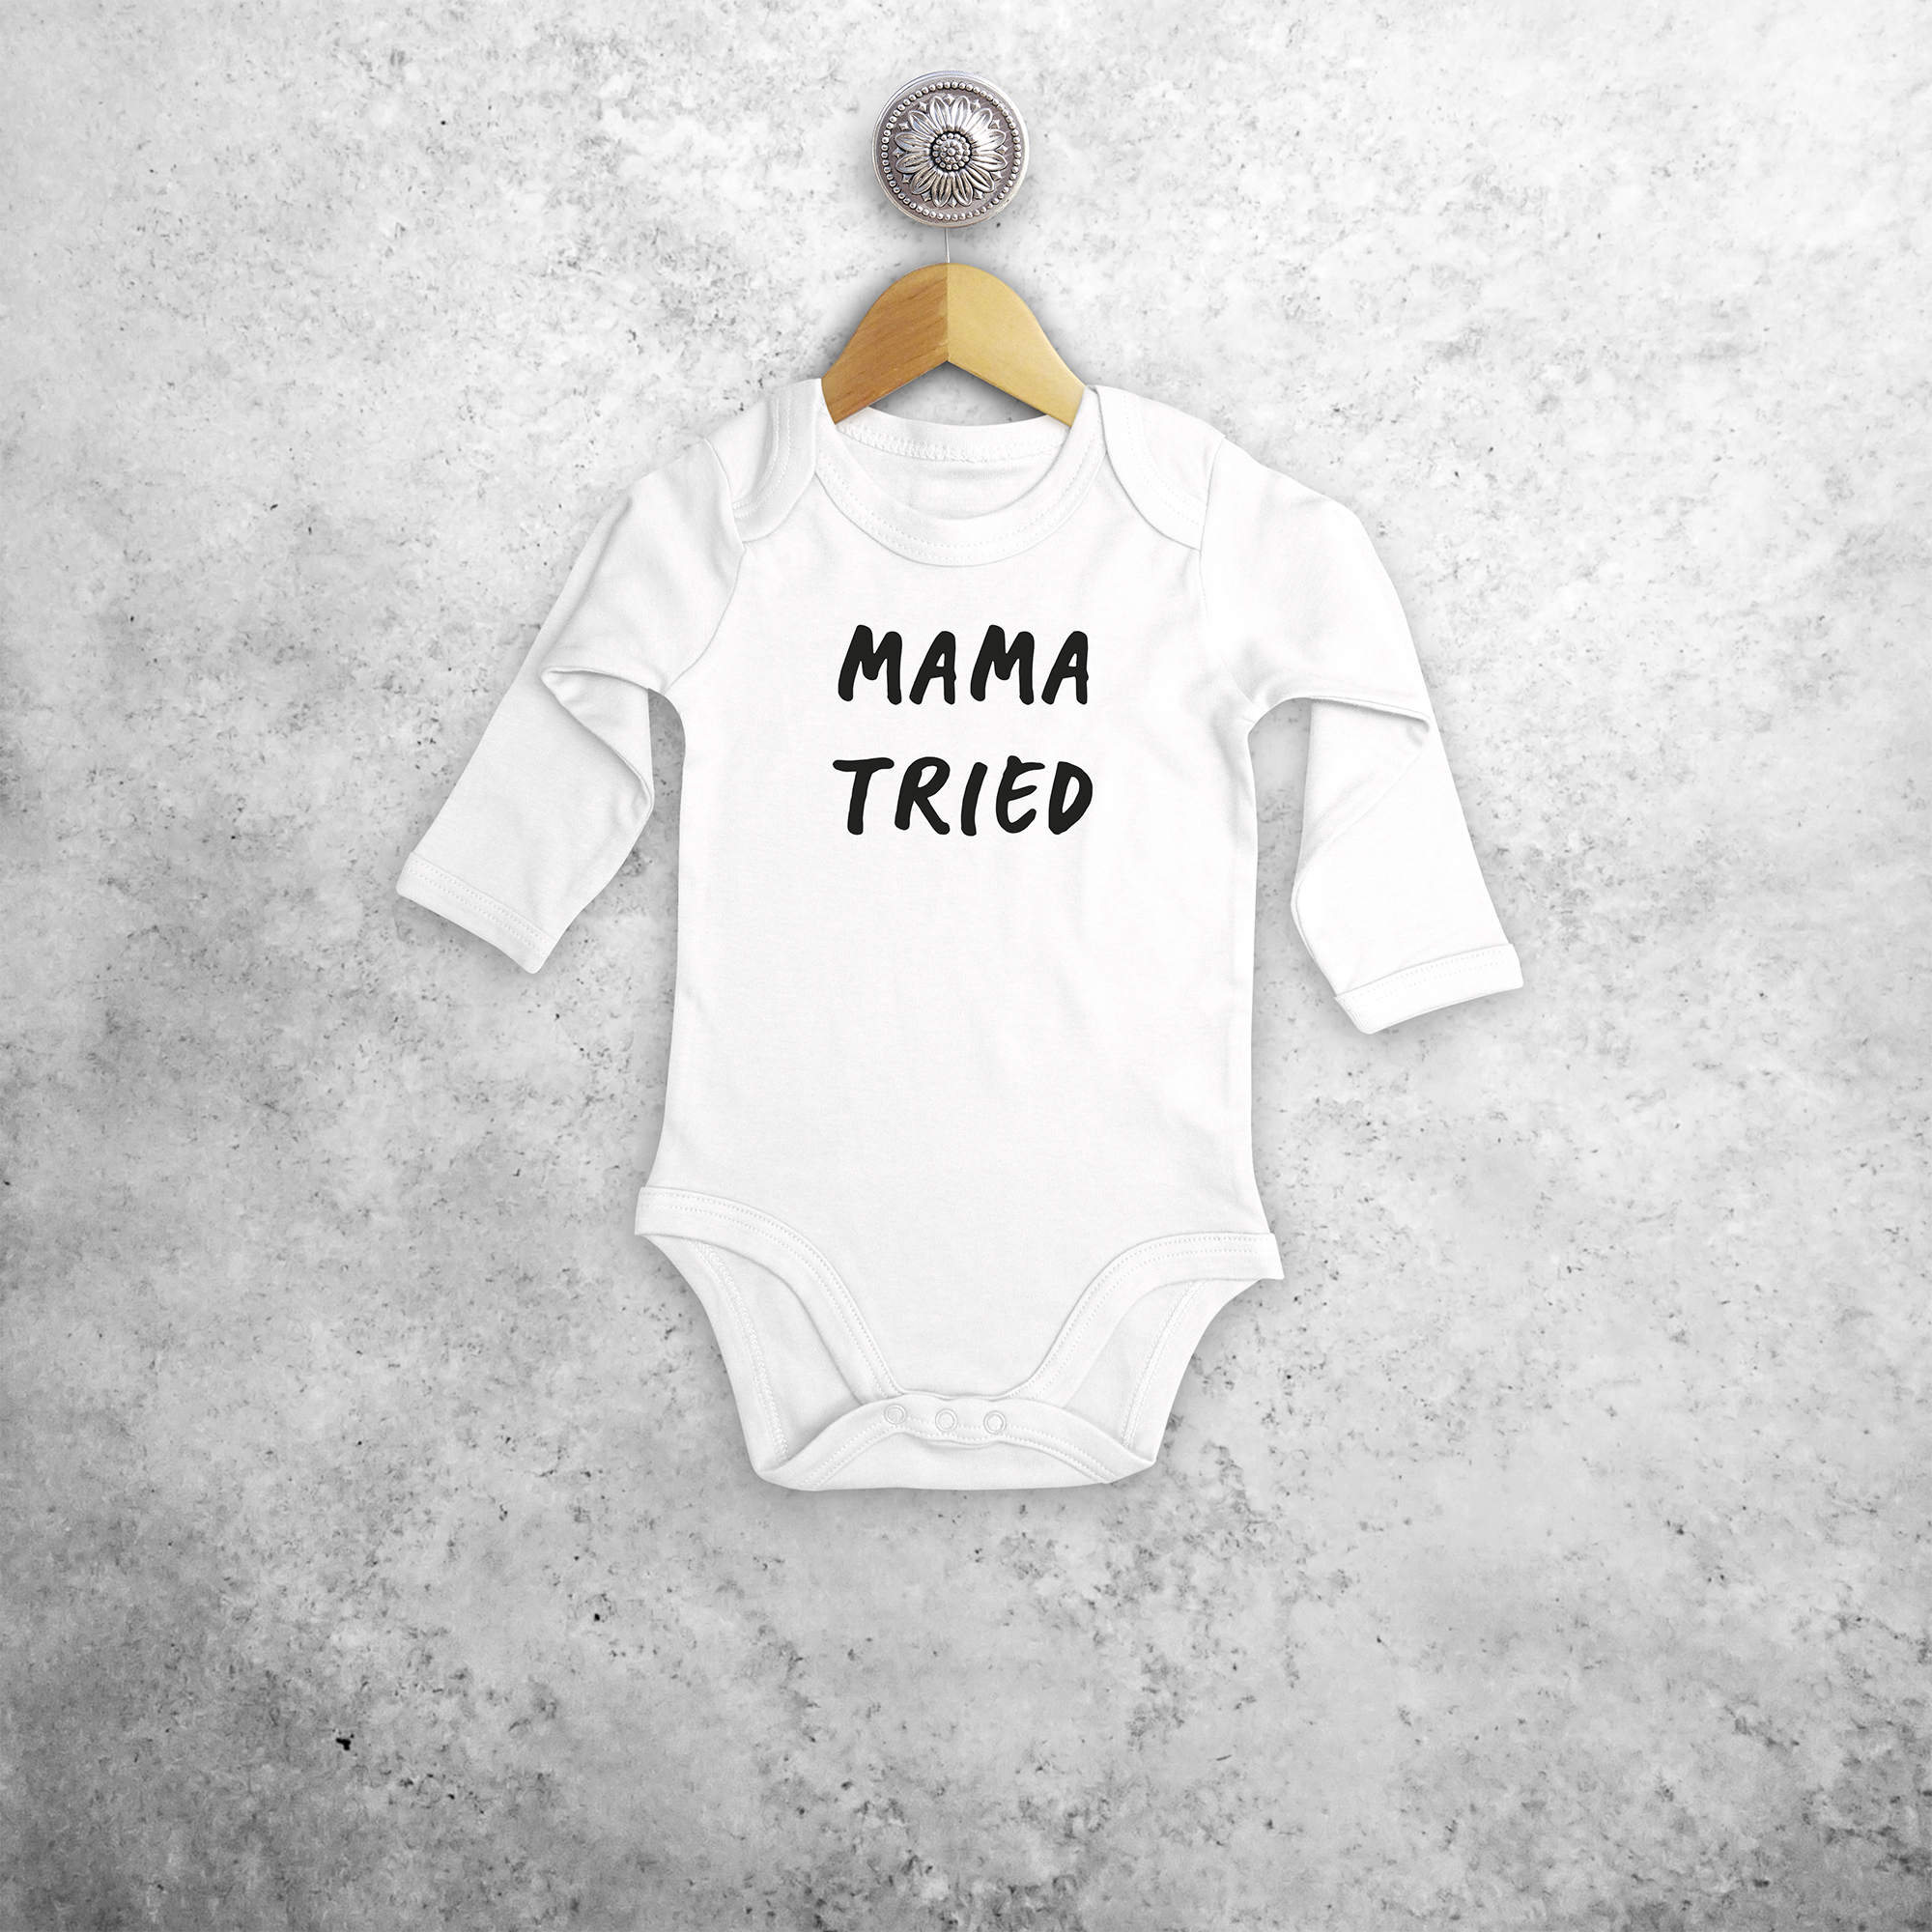 'Mama tried' baby longsleeve bodysuit